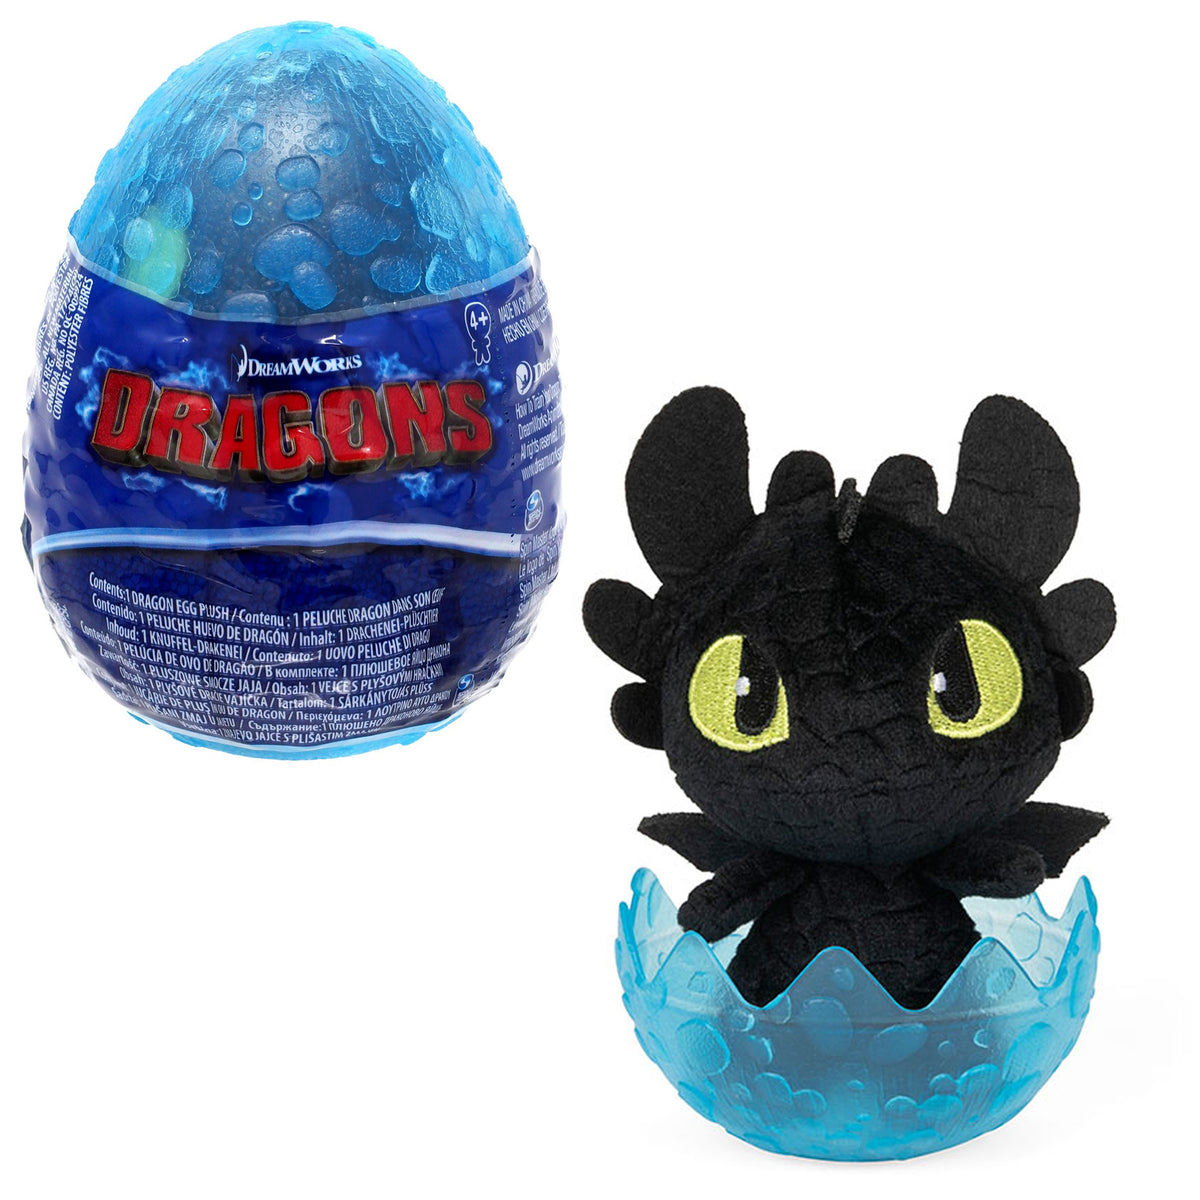 How to Train Your Dragon Plush Dragon Egg - Toothless – Animal Kingdoms ...